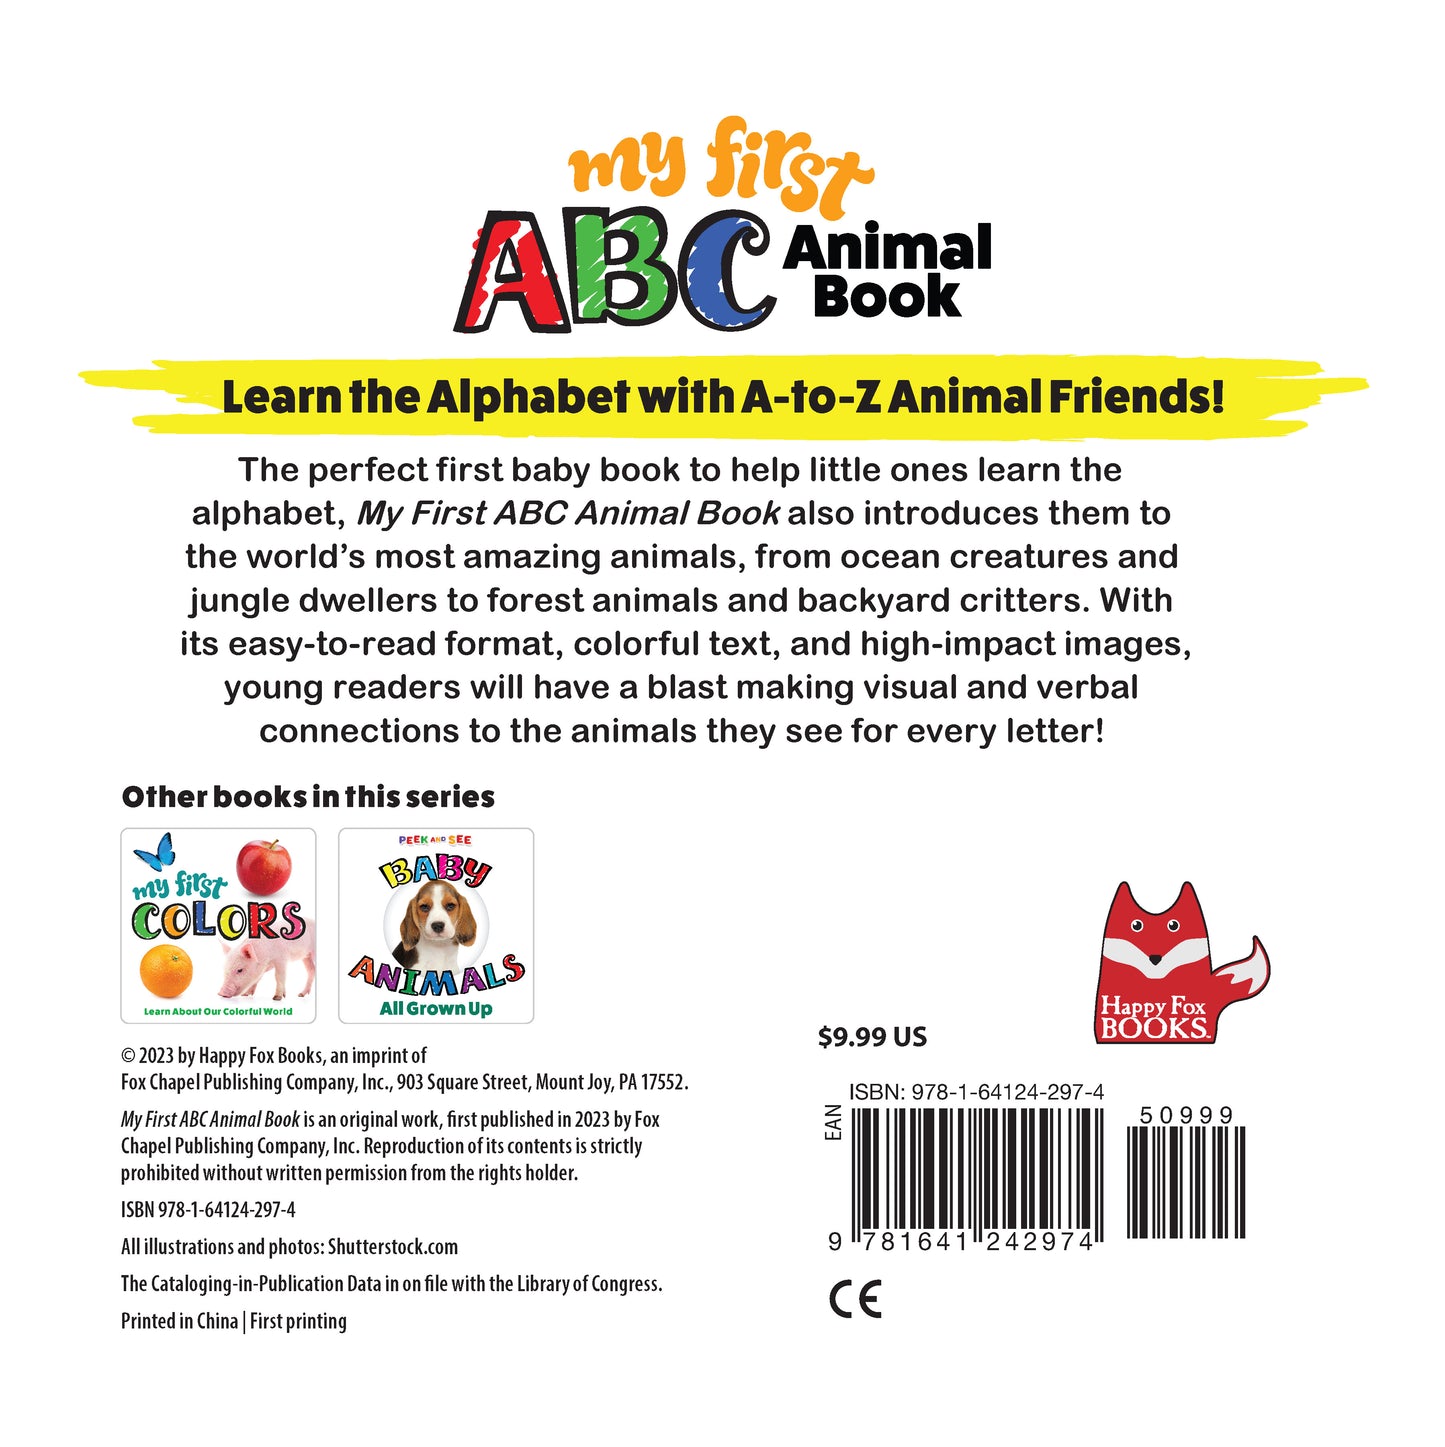 My First ABC Animal Book